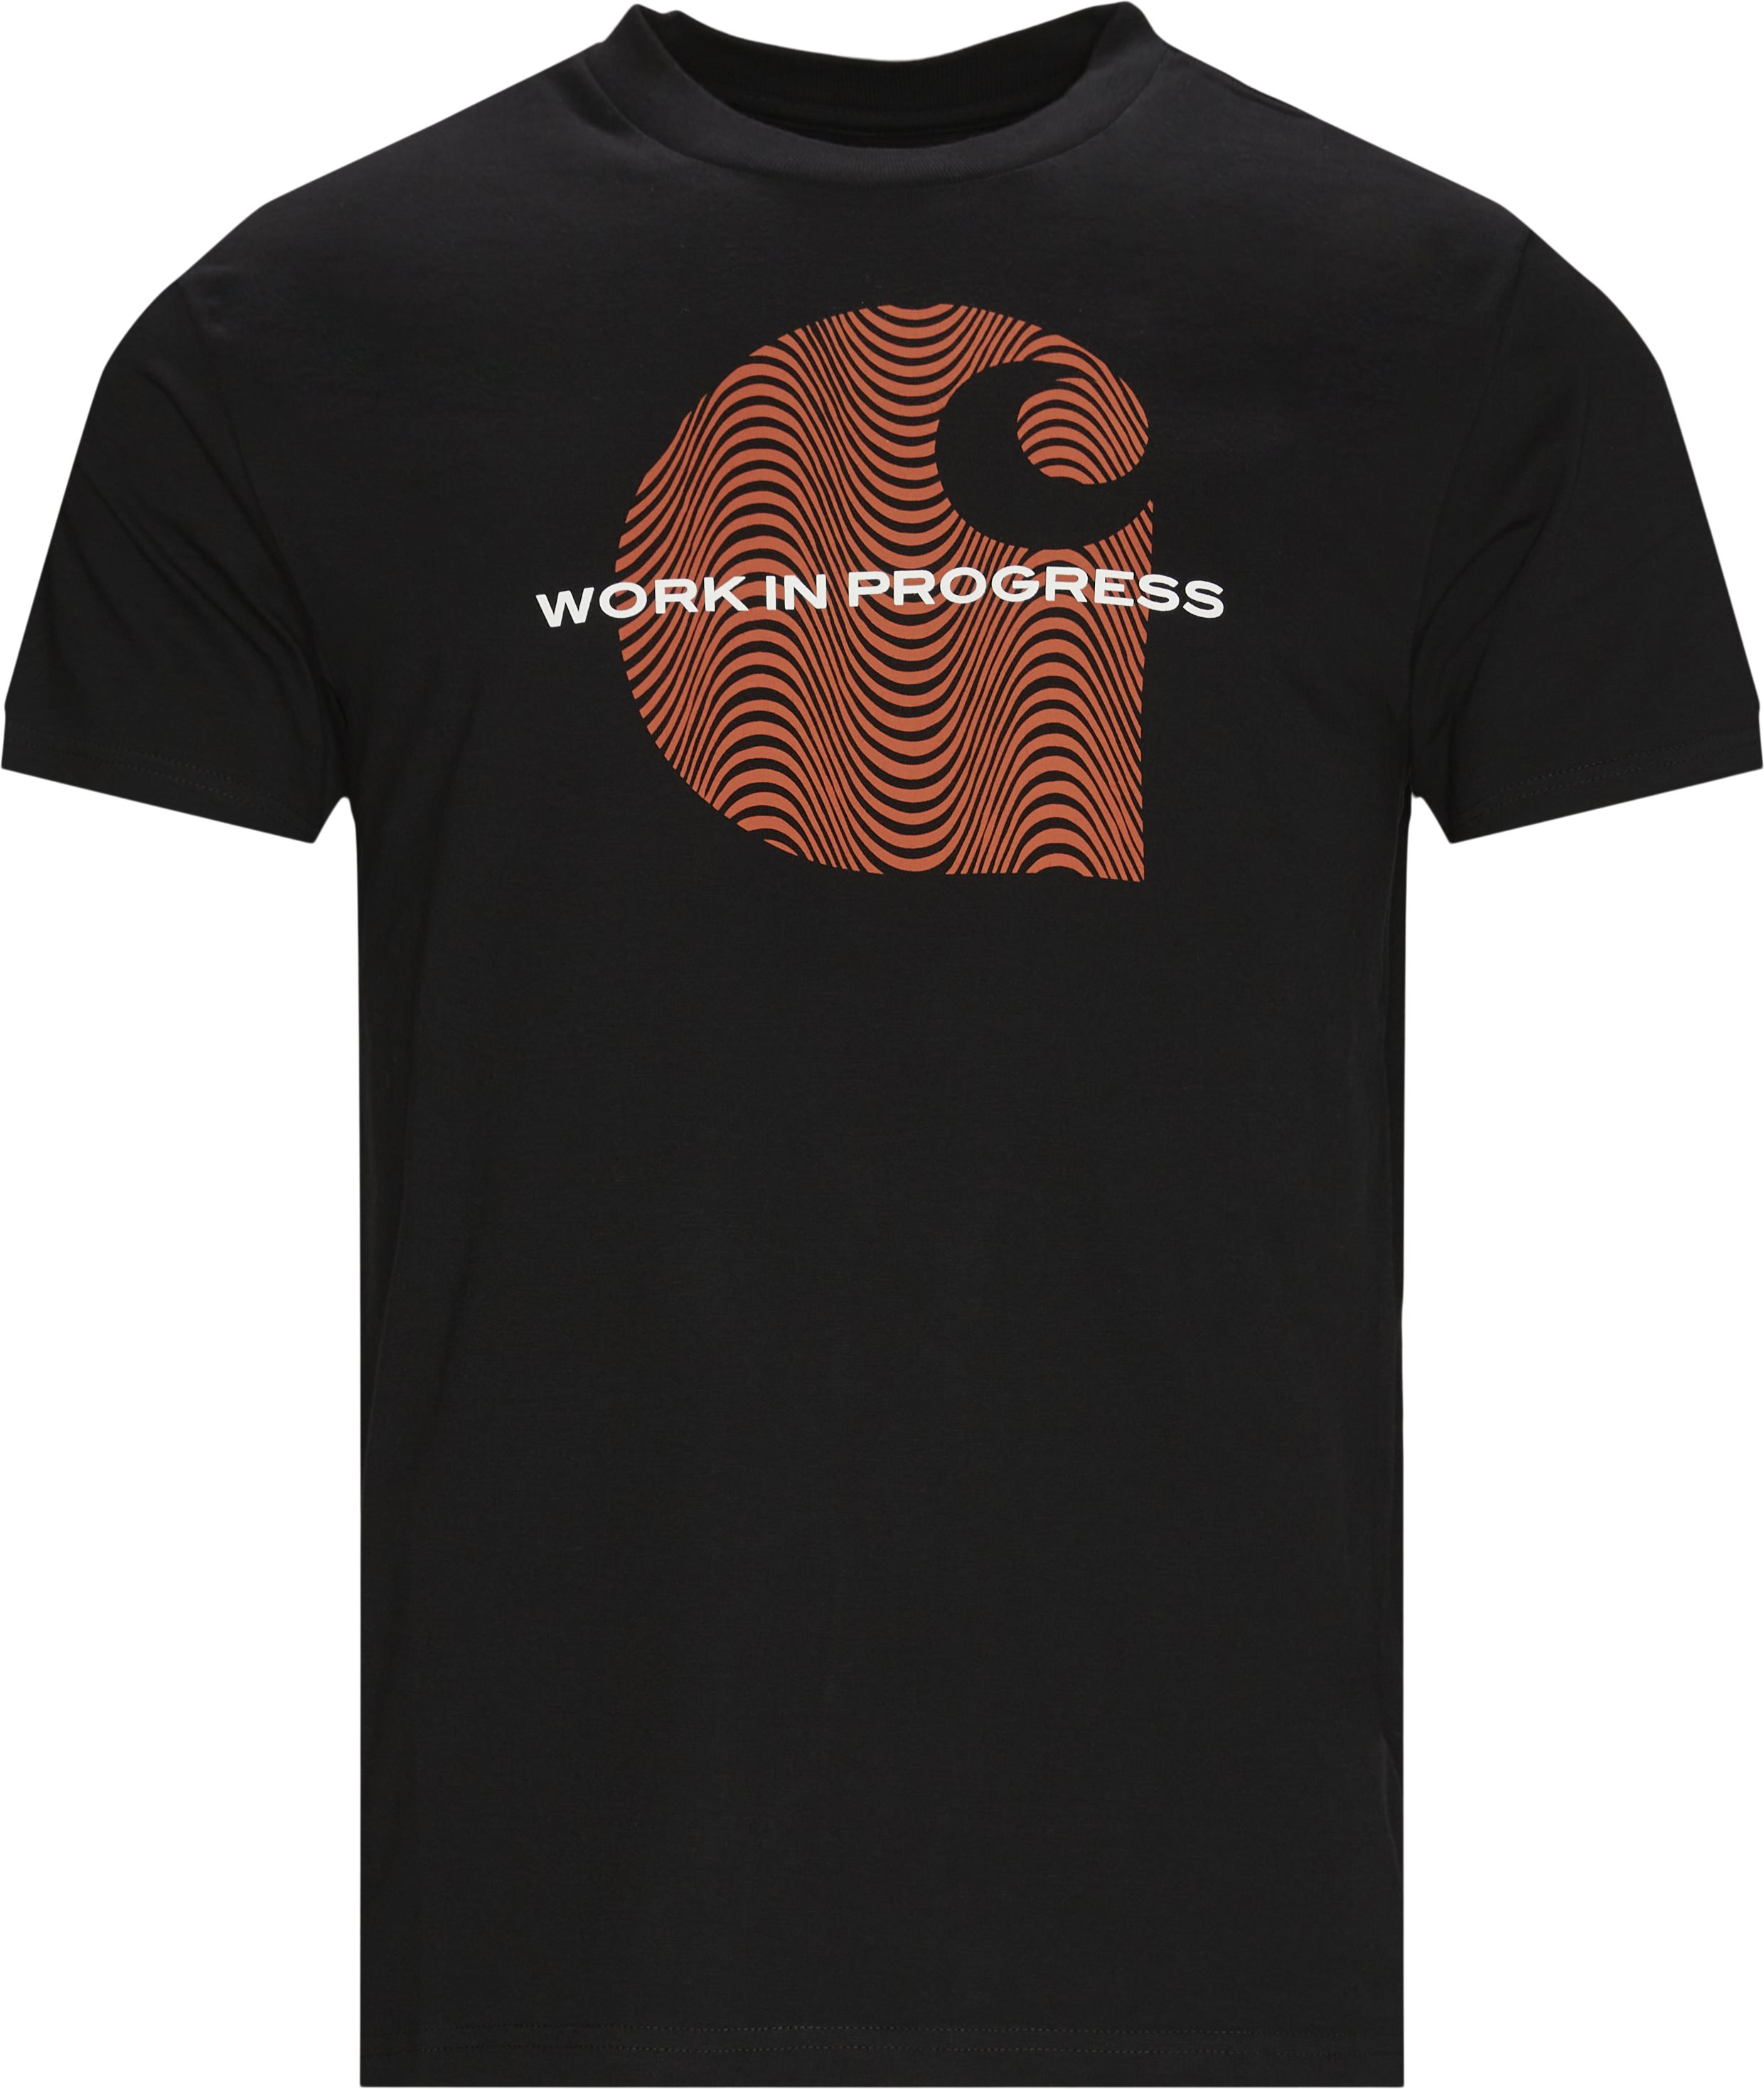 Wave Tee - T-shirts - Regular fit - Black